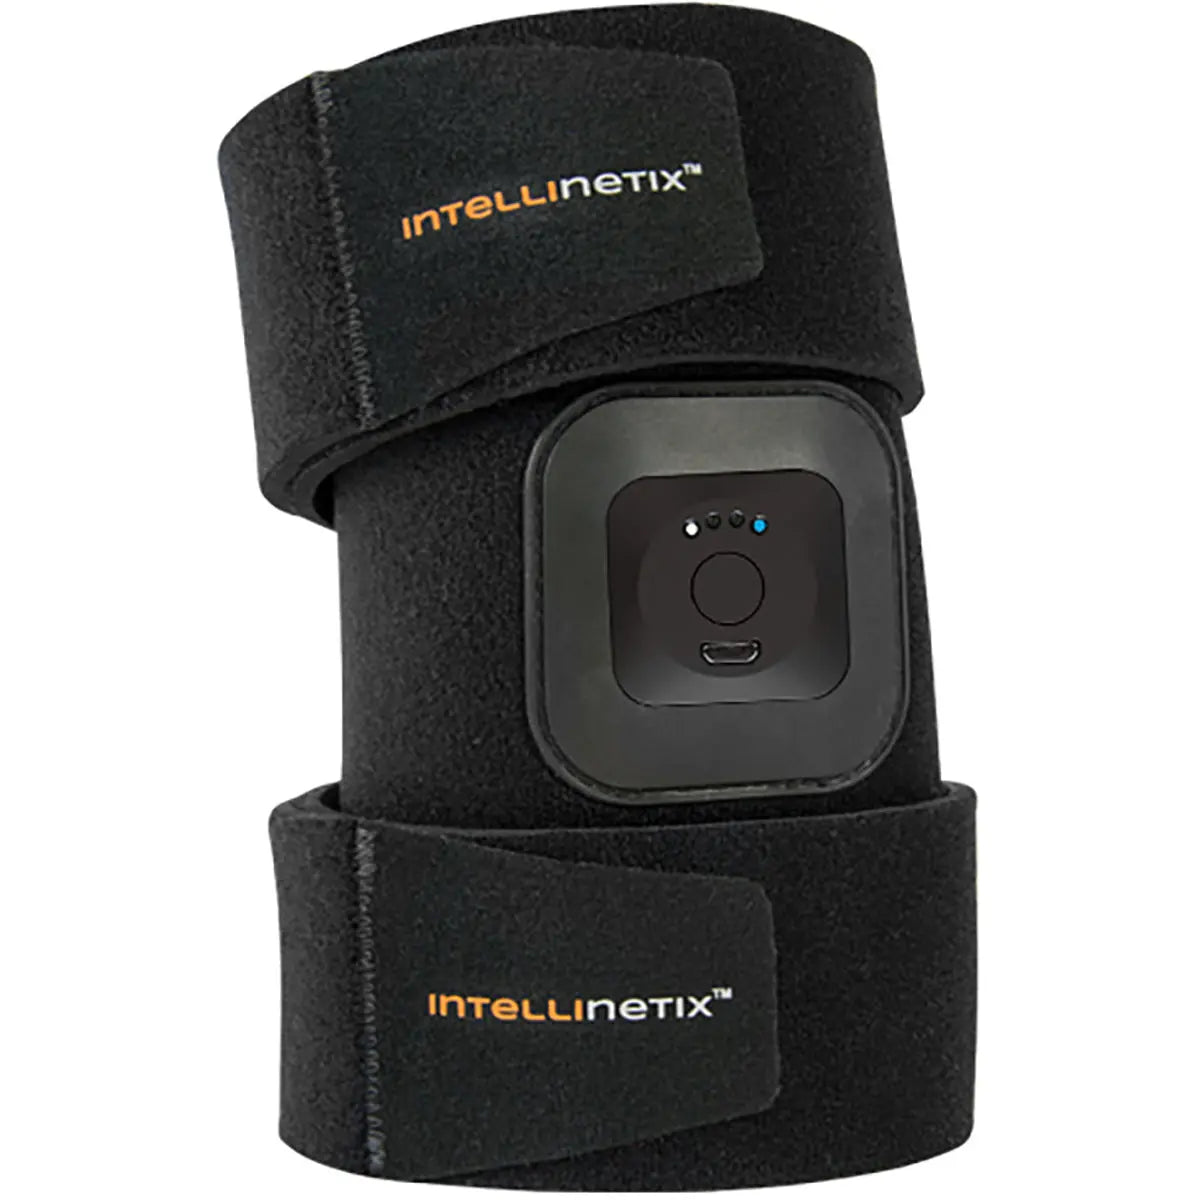 Intellinetix Vibrating Quad and Thigh Therapy Compression Wrap - Universal Intellinetix